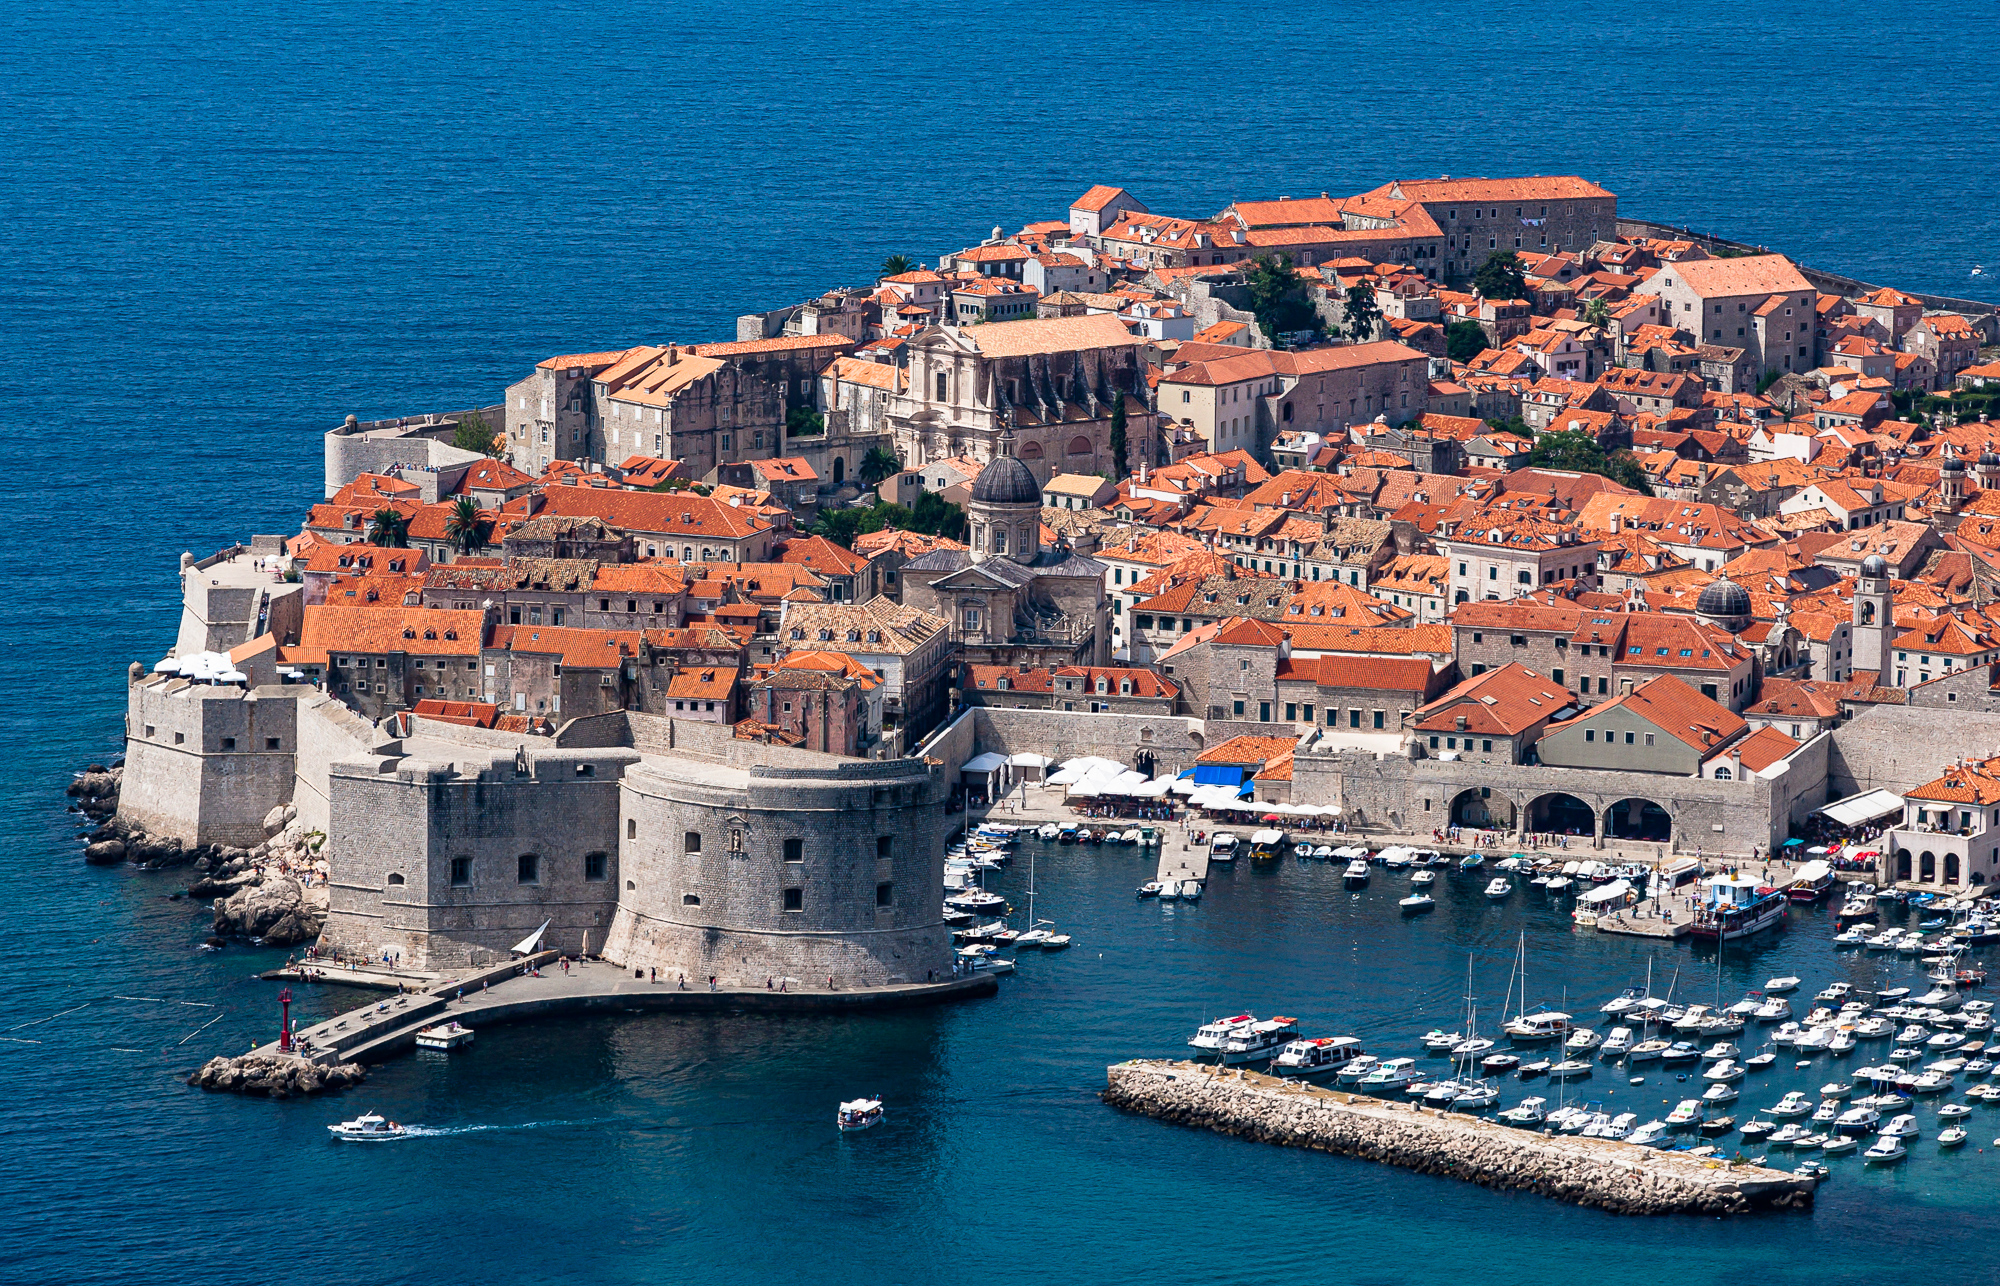 8th century castle walls guard sea access to Dubrovnik, Croatia